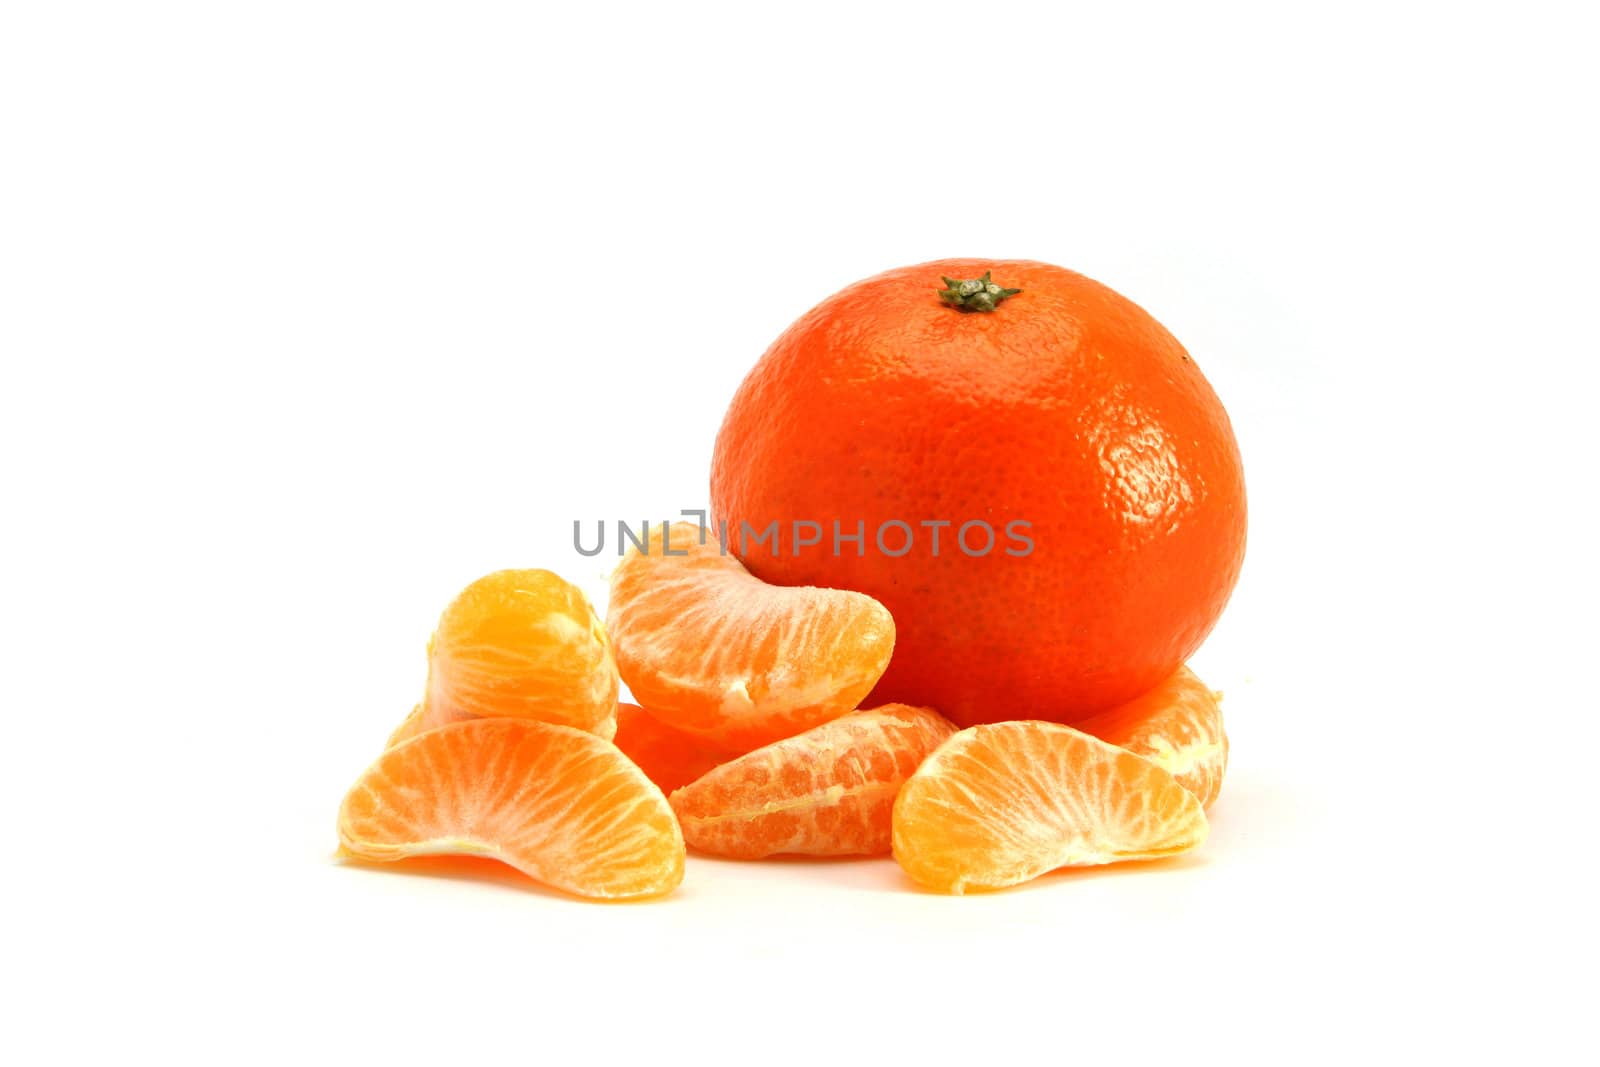 Orange and orange segments by phovoir